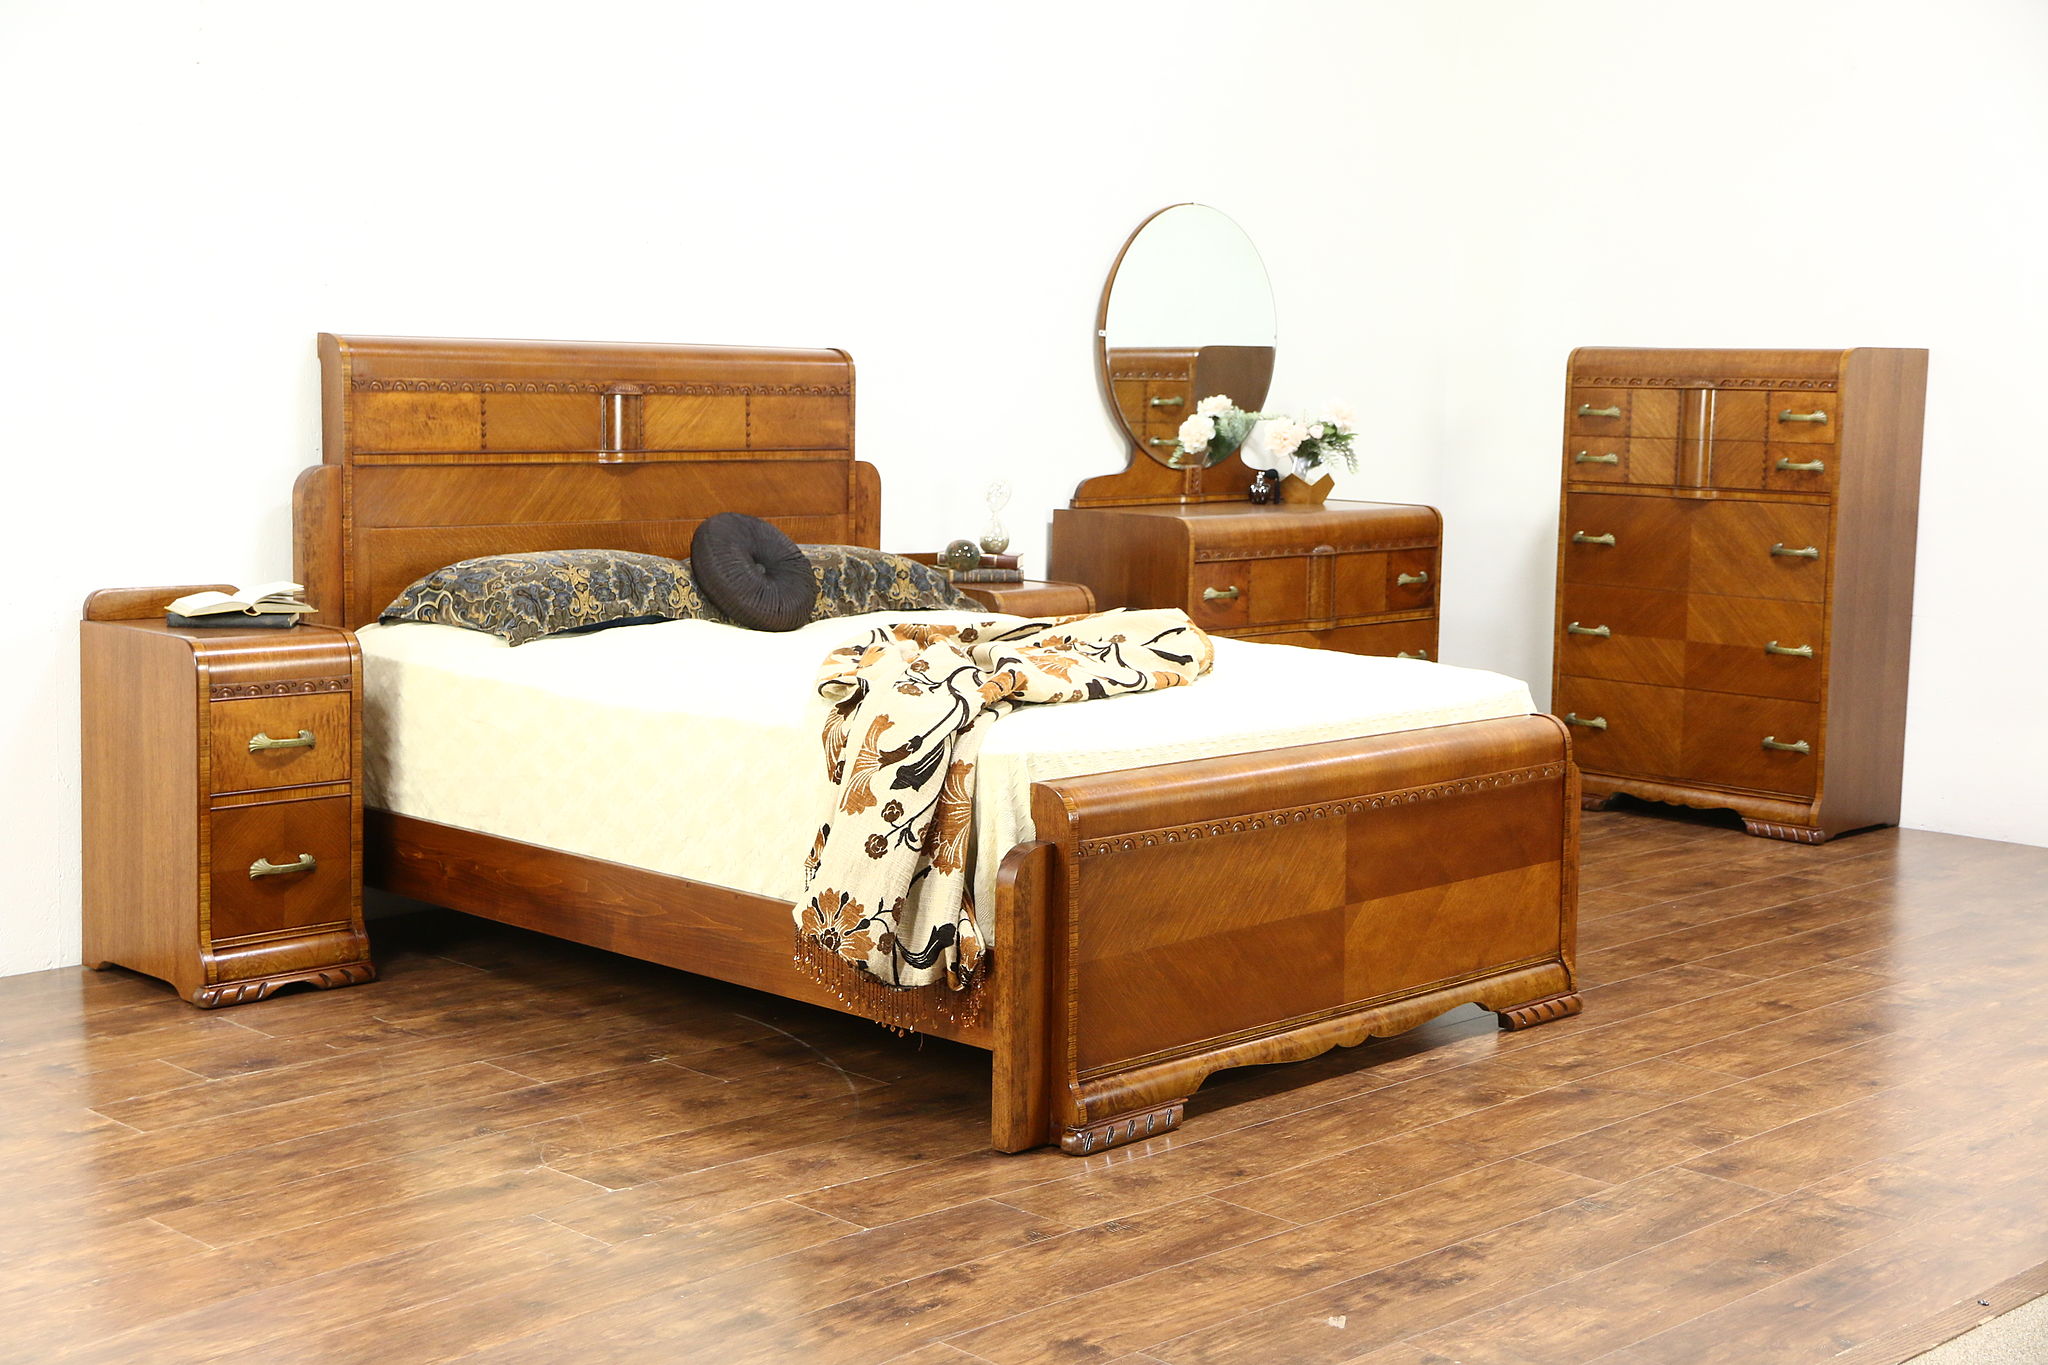 1950s art deco chinoiserie bedroom furniture